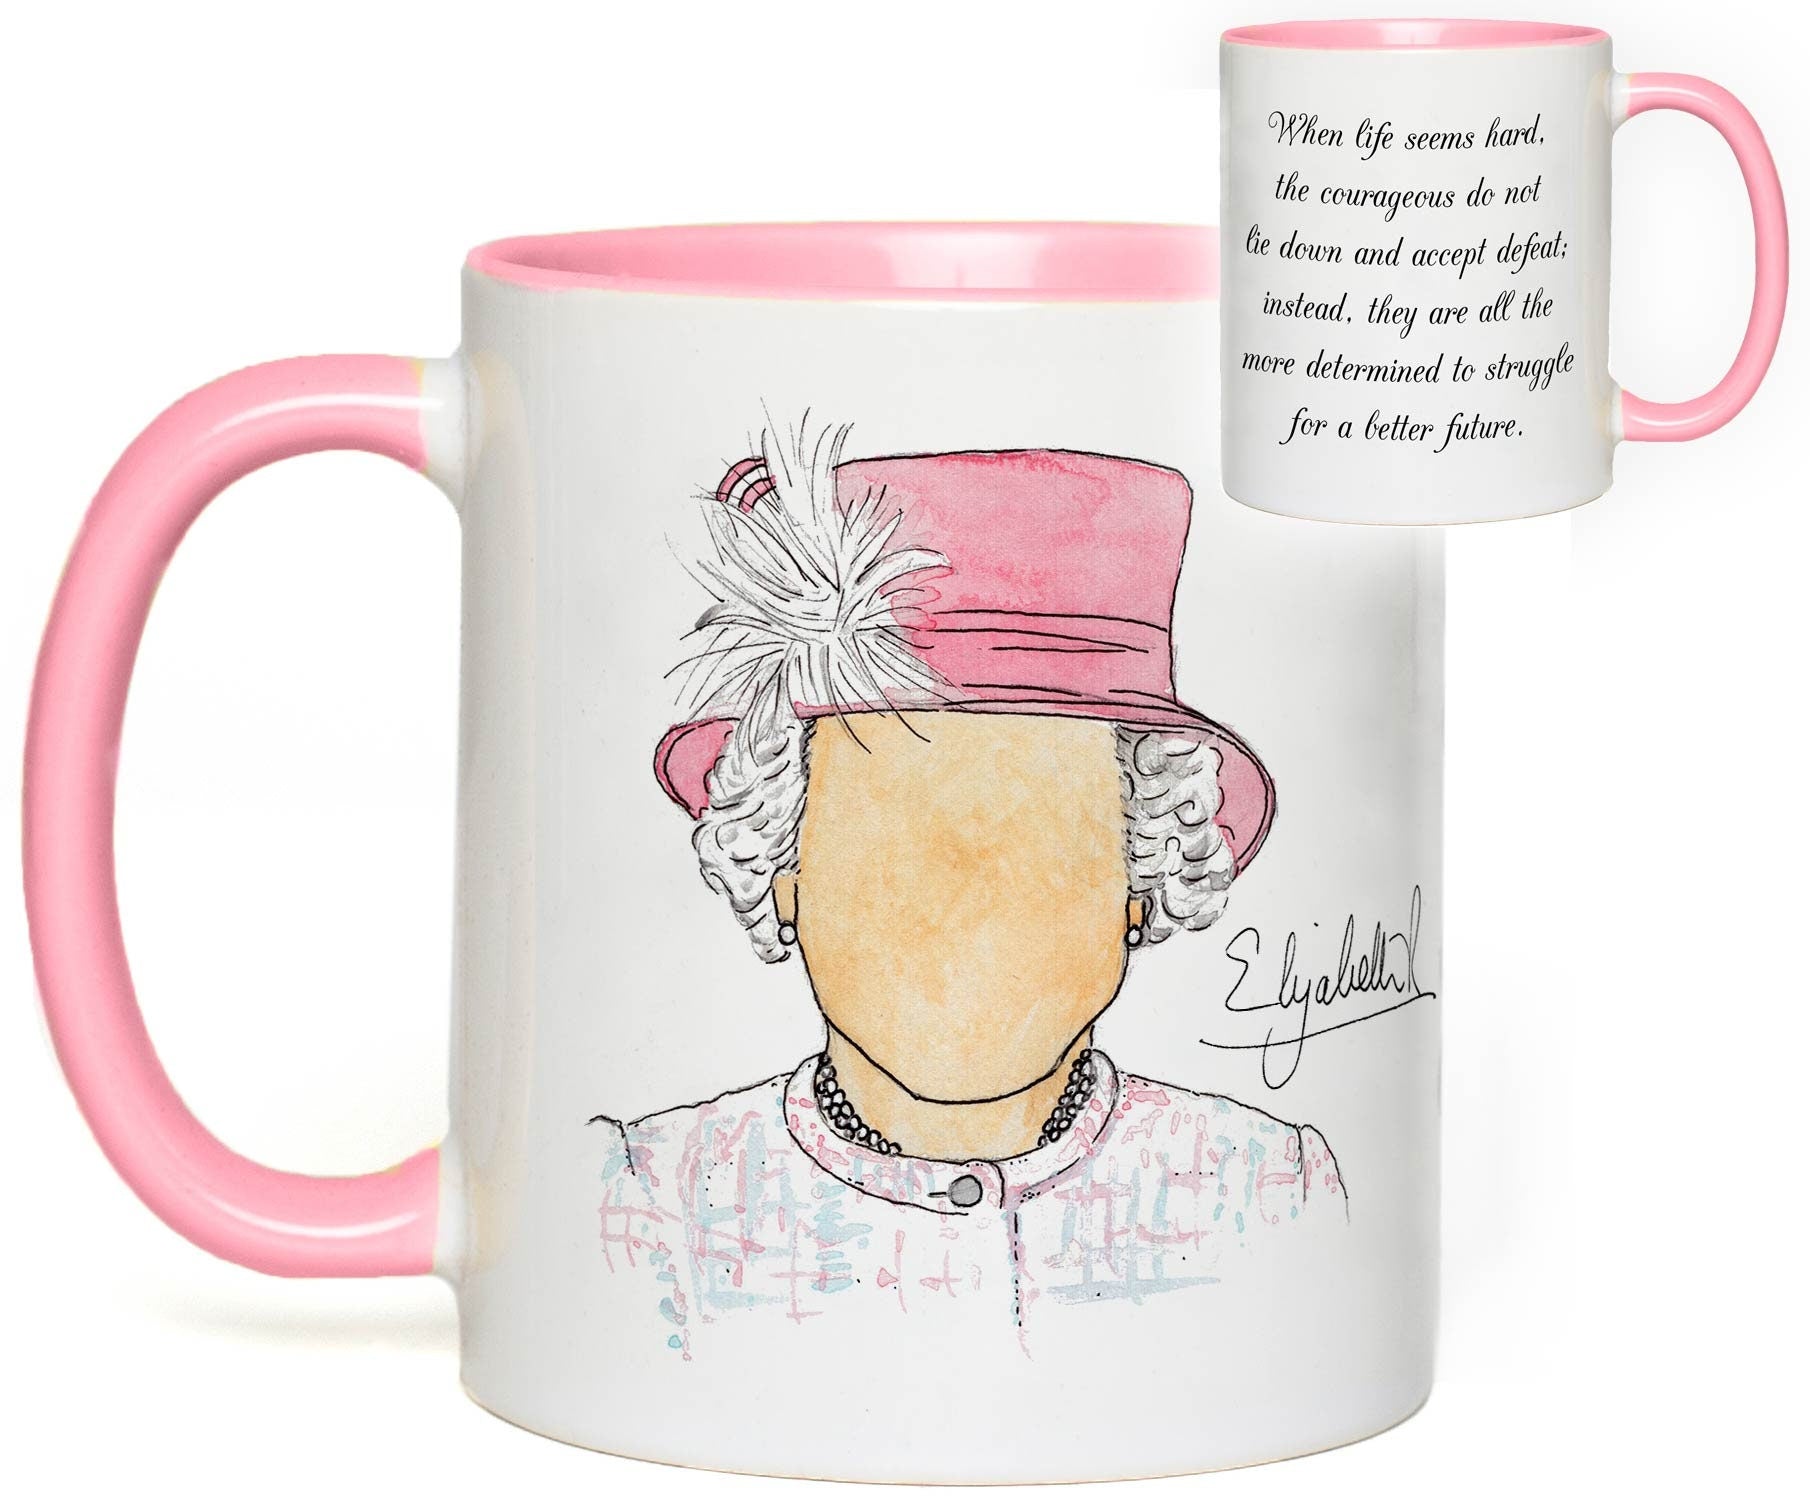 Little Women Coffee Mug (Louisa May Alcott) - A Fine Quotation